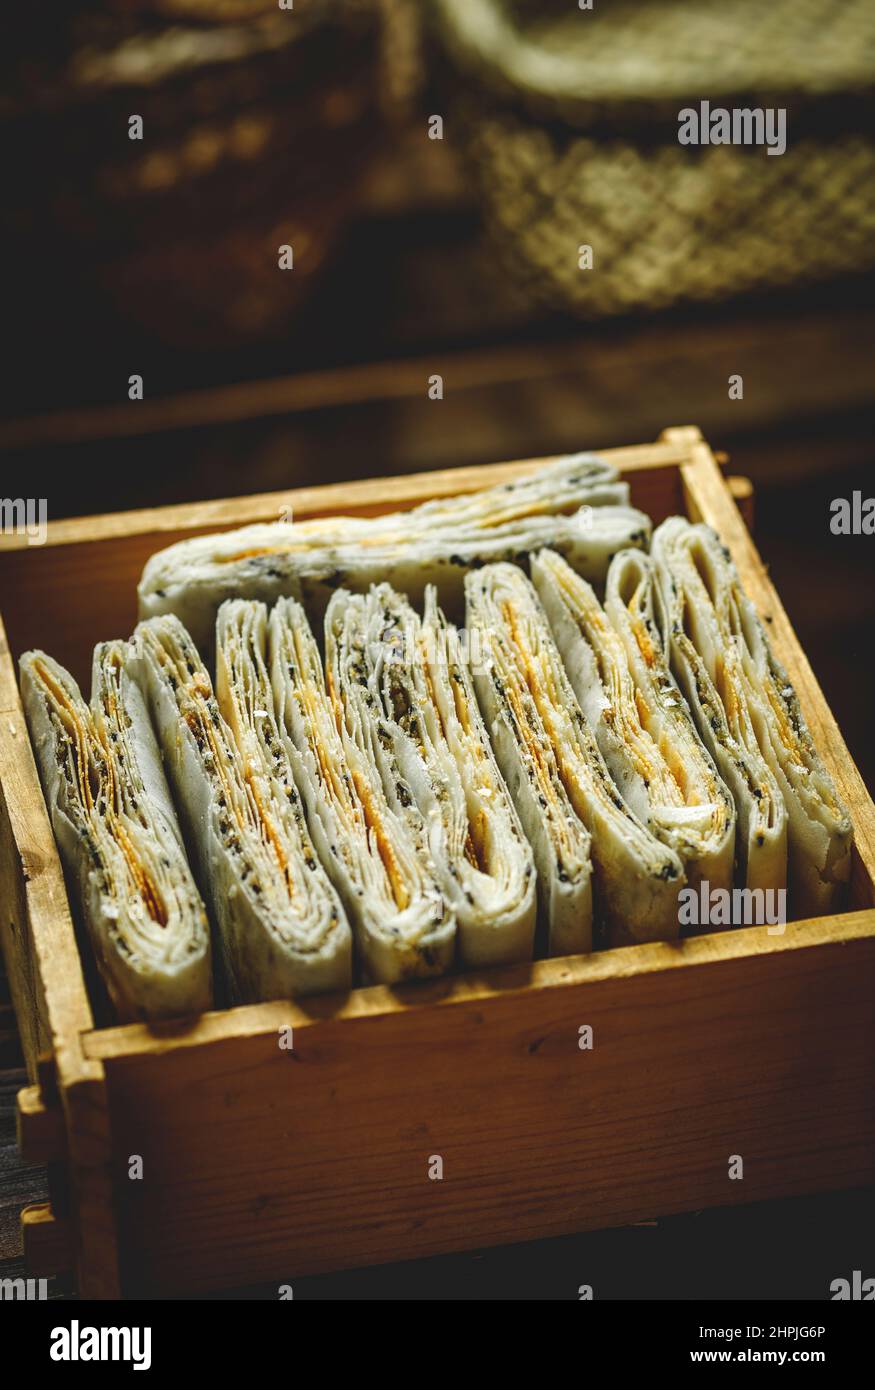 Shandong pancakes Stock Photo